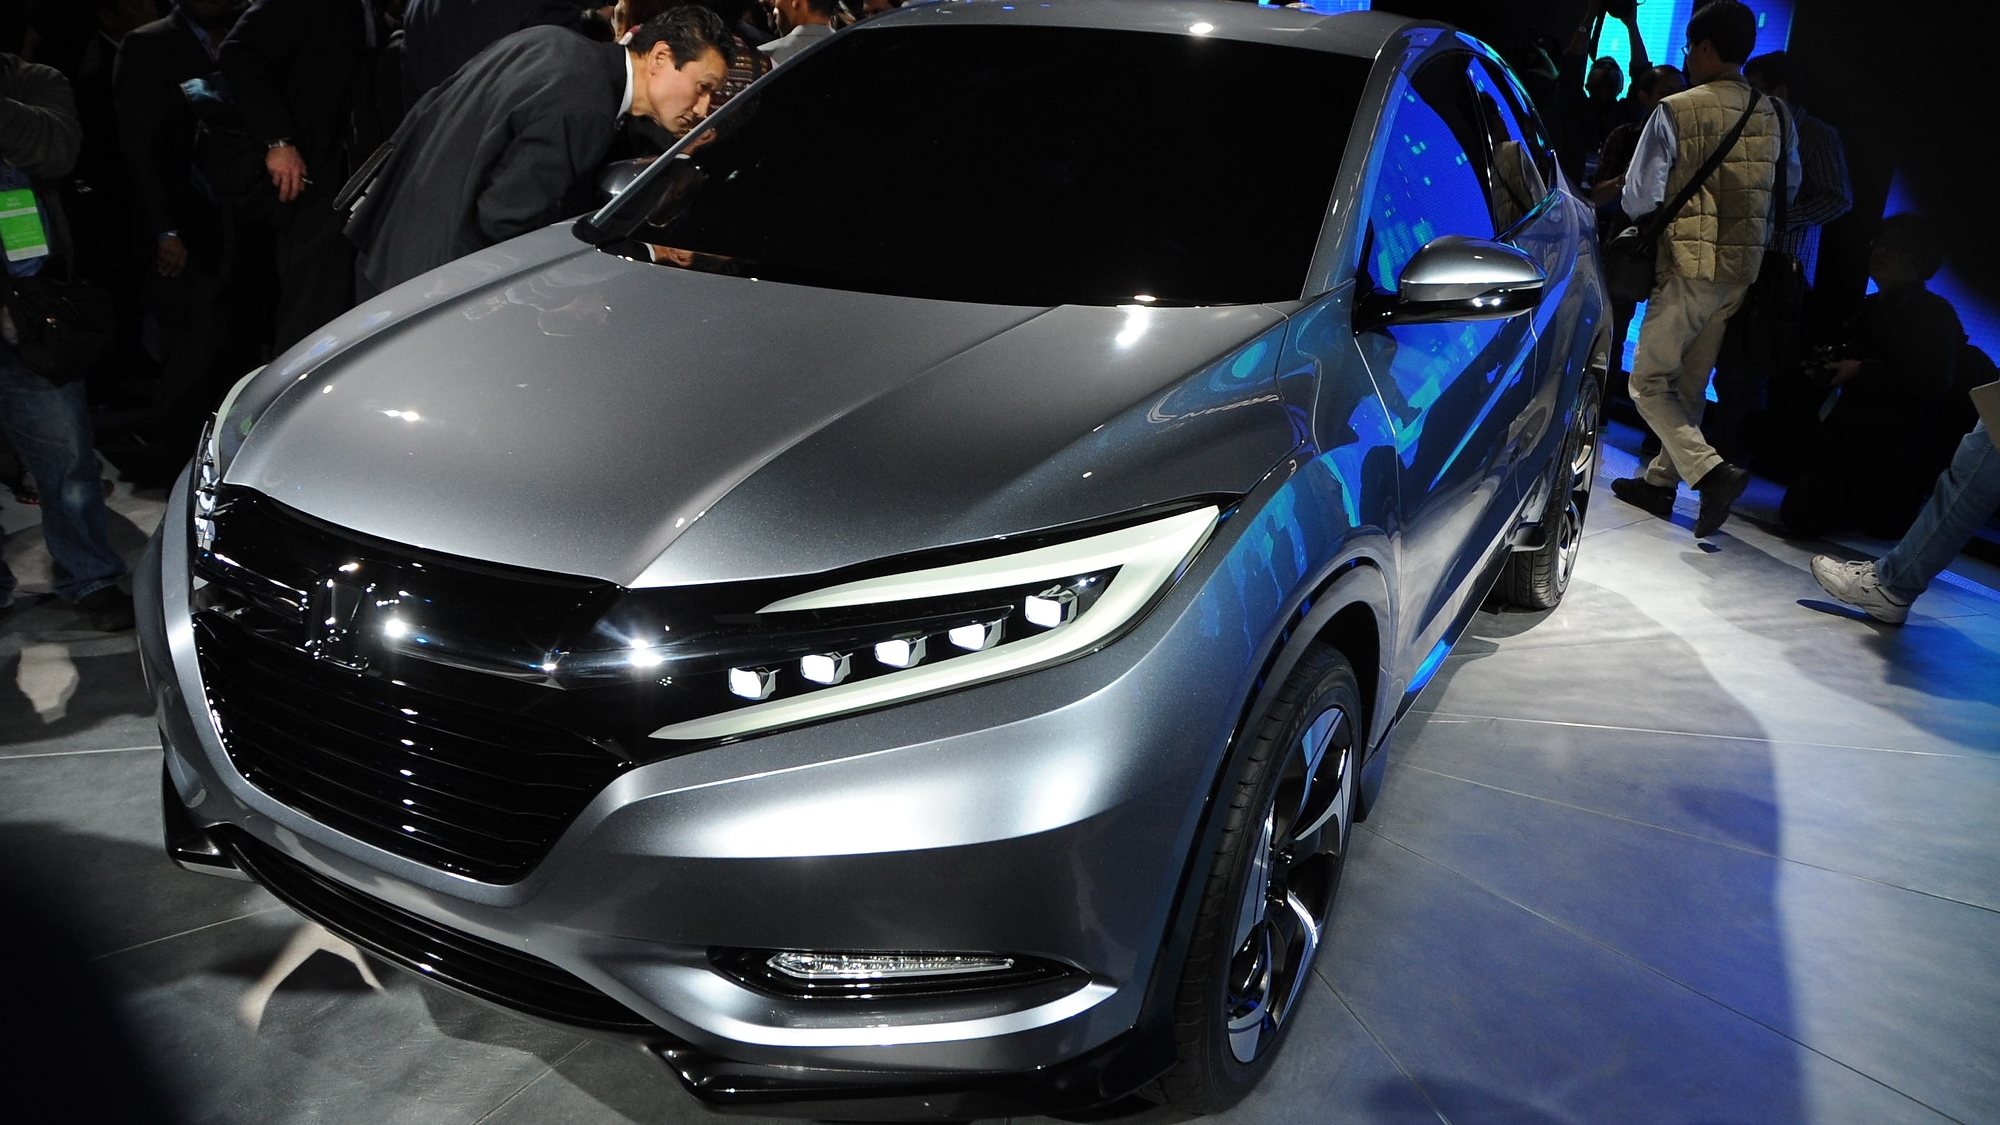 Honda Urban SUV Concept revealed at 2013 Detroit Auto Show